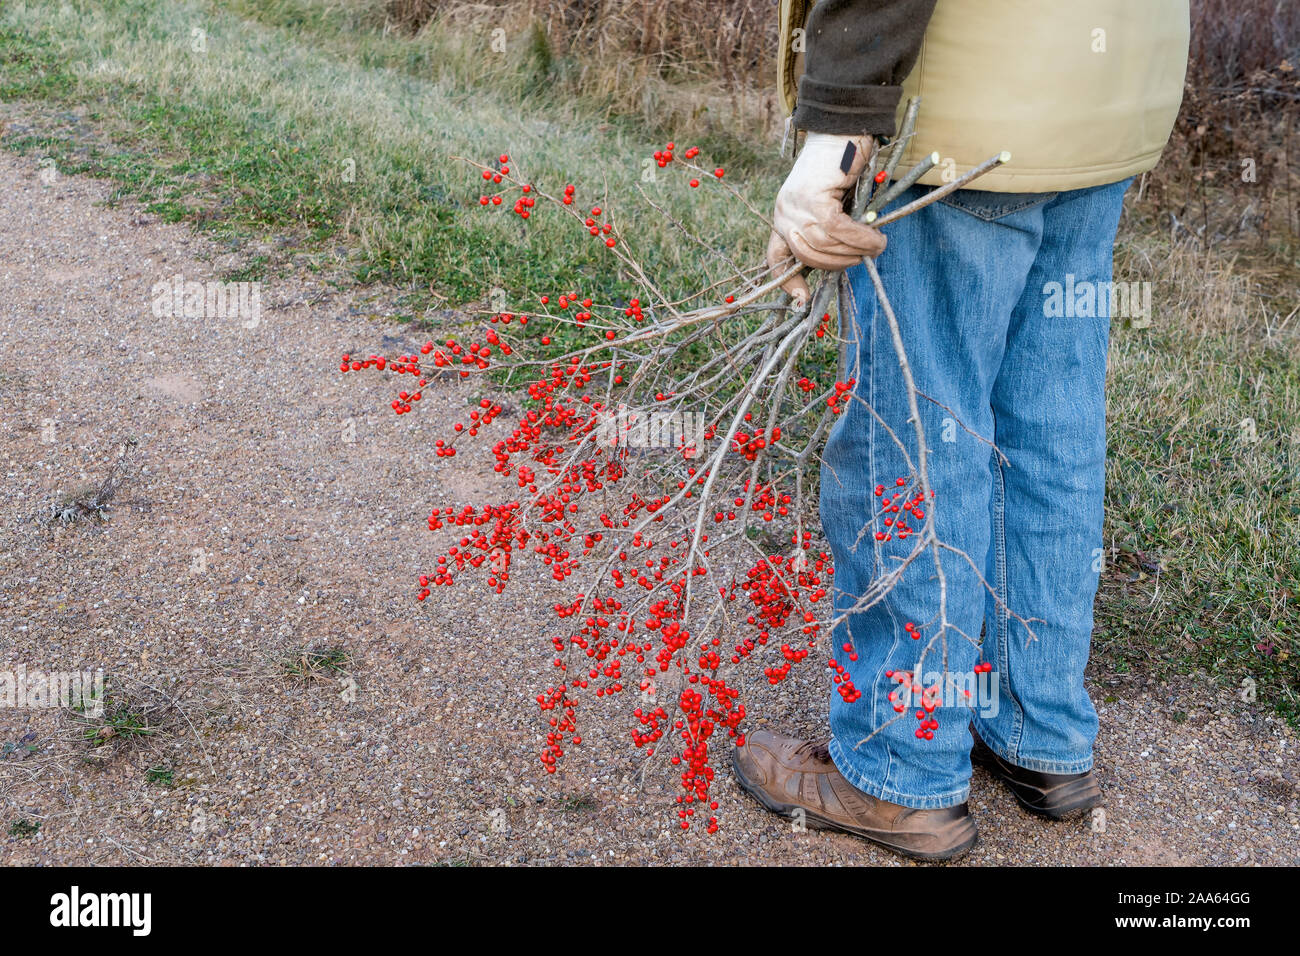 A man harvesting wild growing winter berries. Stock Photo